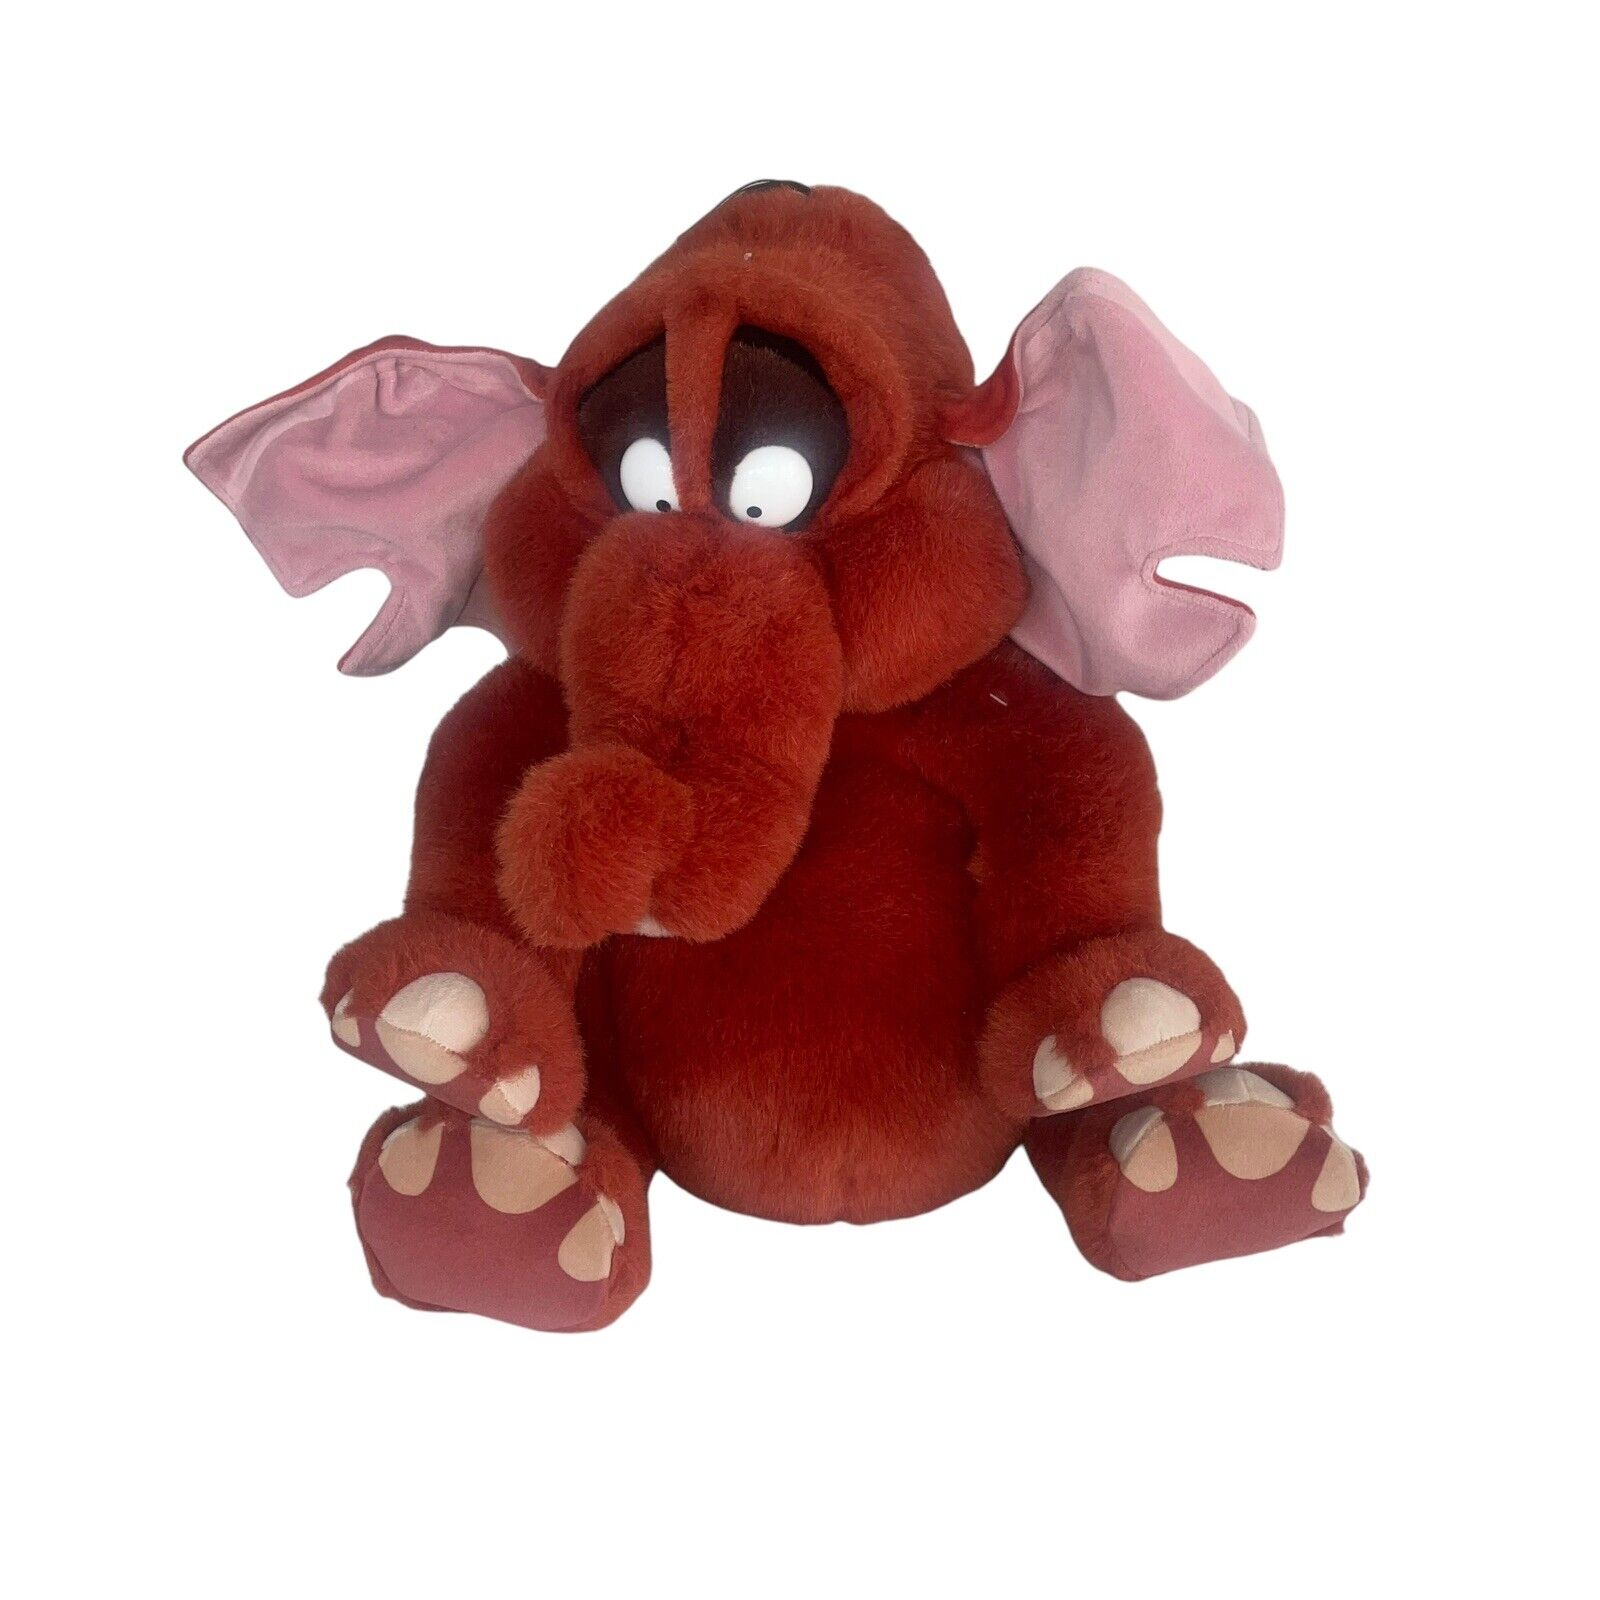 Vintage Gund Disney Tarzan Plush Tantor Elephant Large 18” Red Stuffed Animal